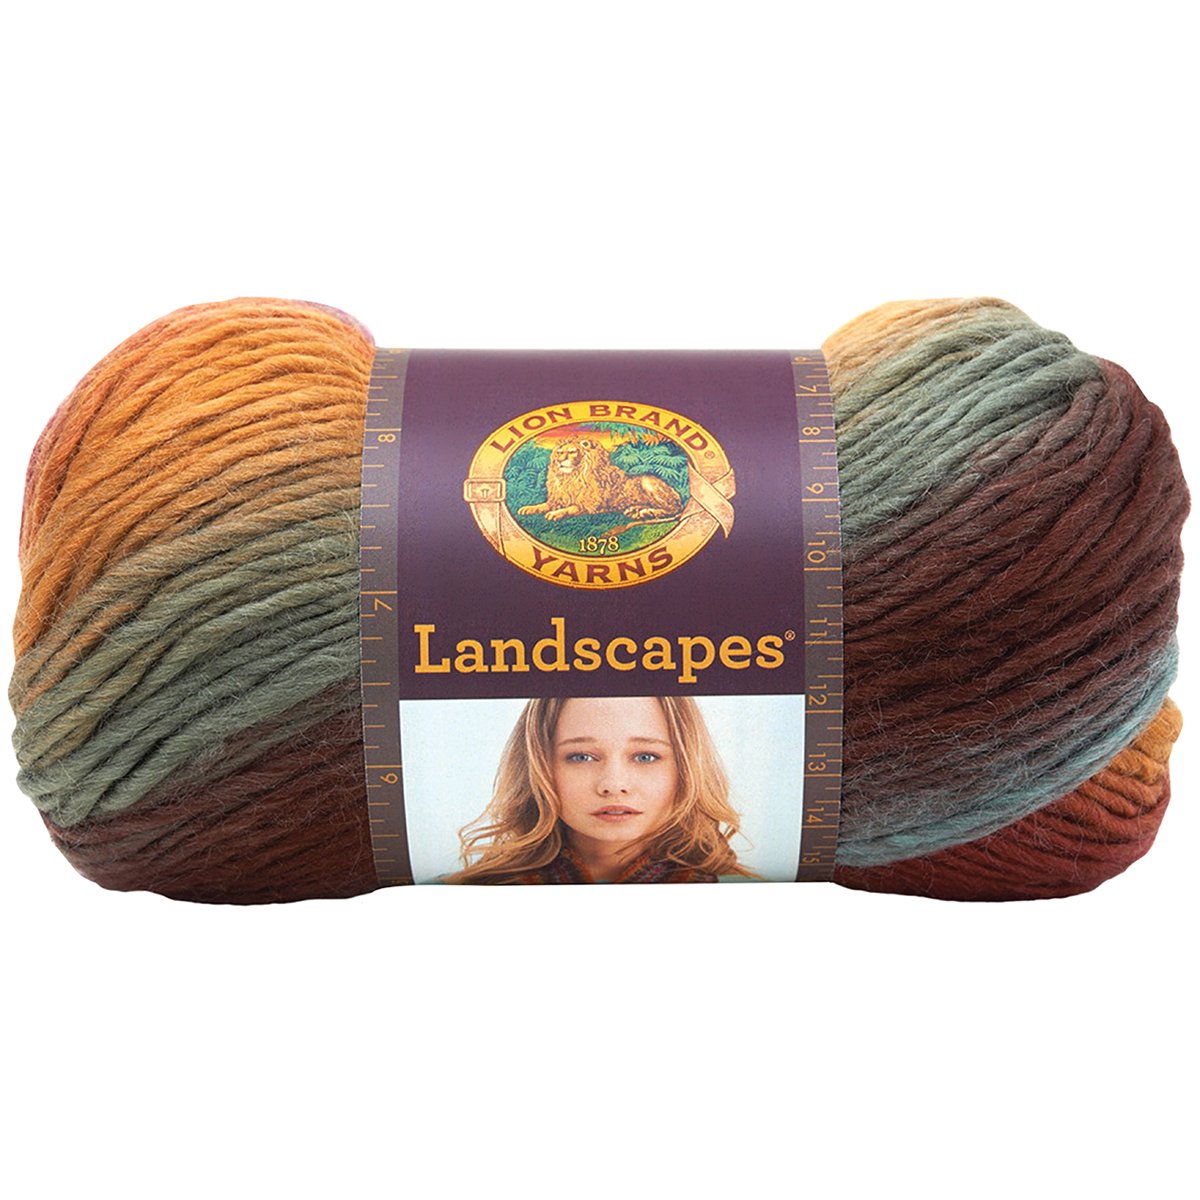 Lion Brand Yarn Landscapes Yarn, Multicolor Yarn for Knitting, Crocheting Yarn, 3-Pack, Desert Spring